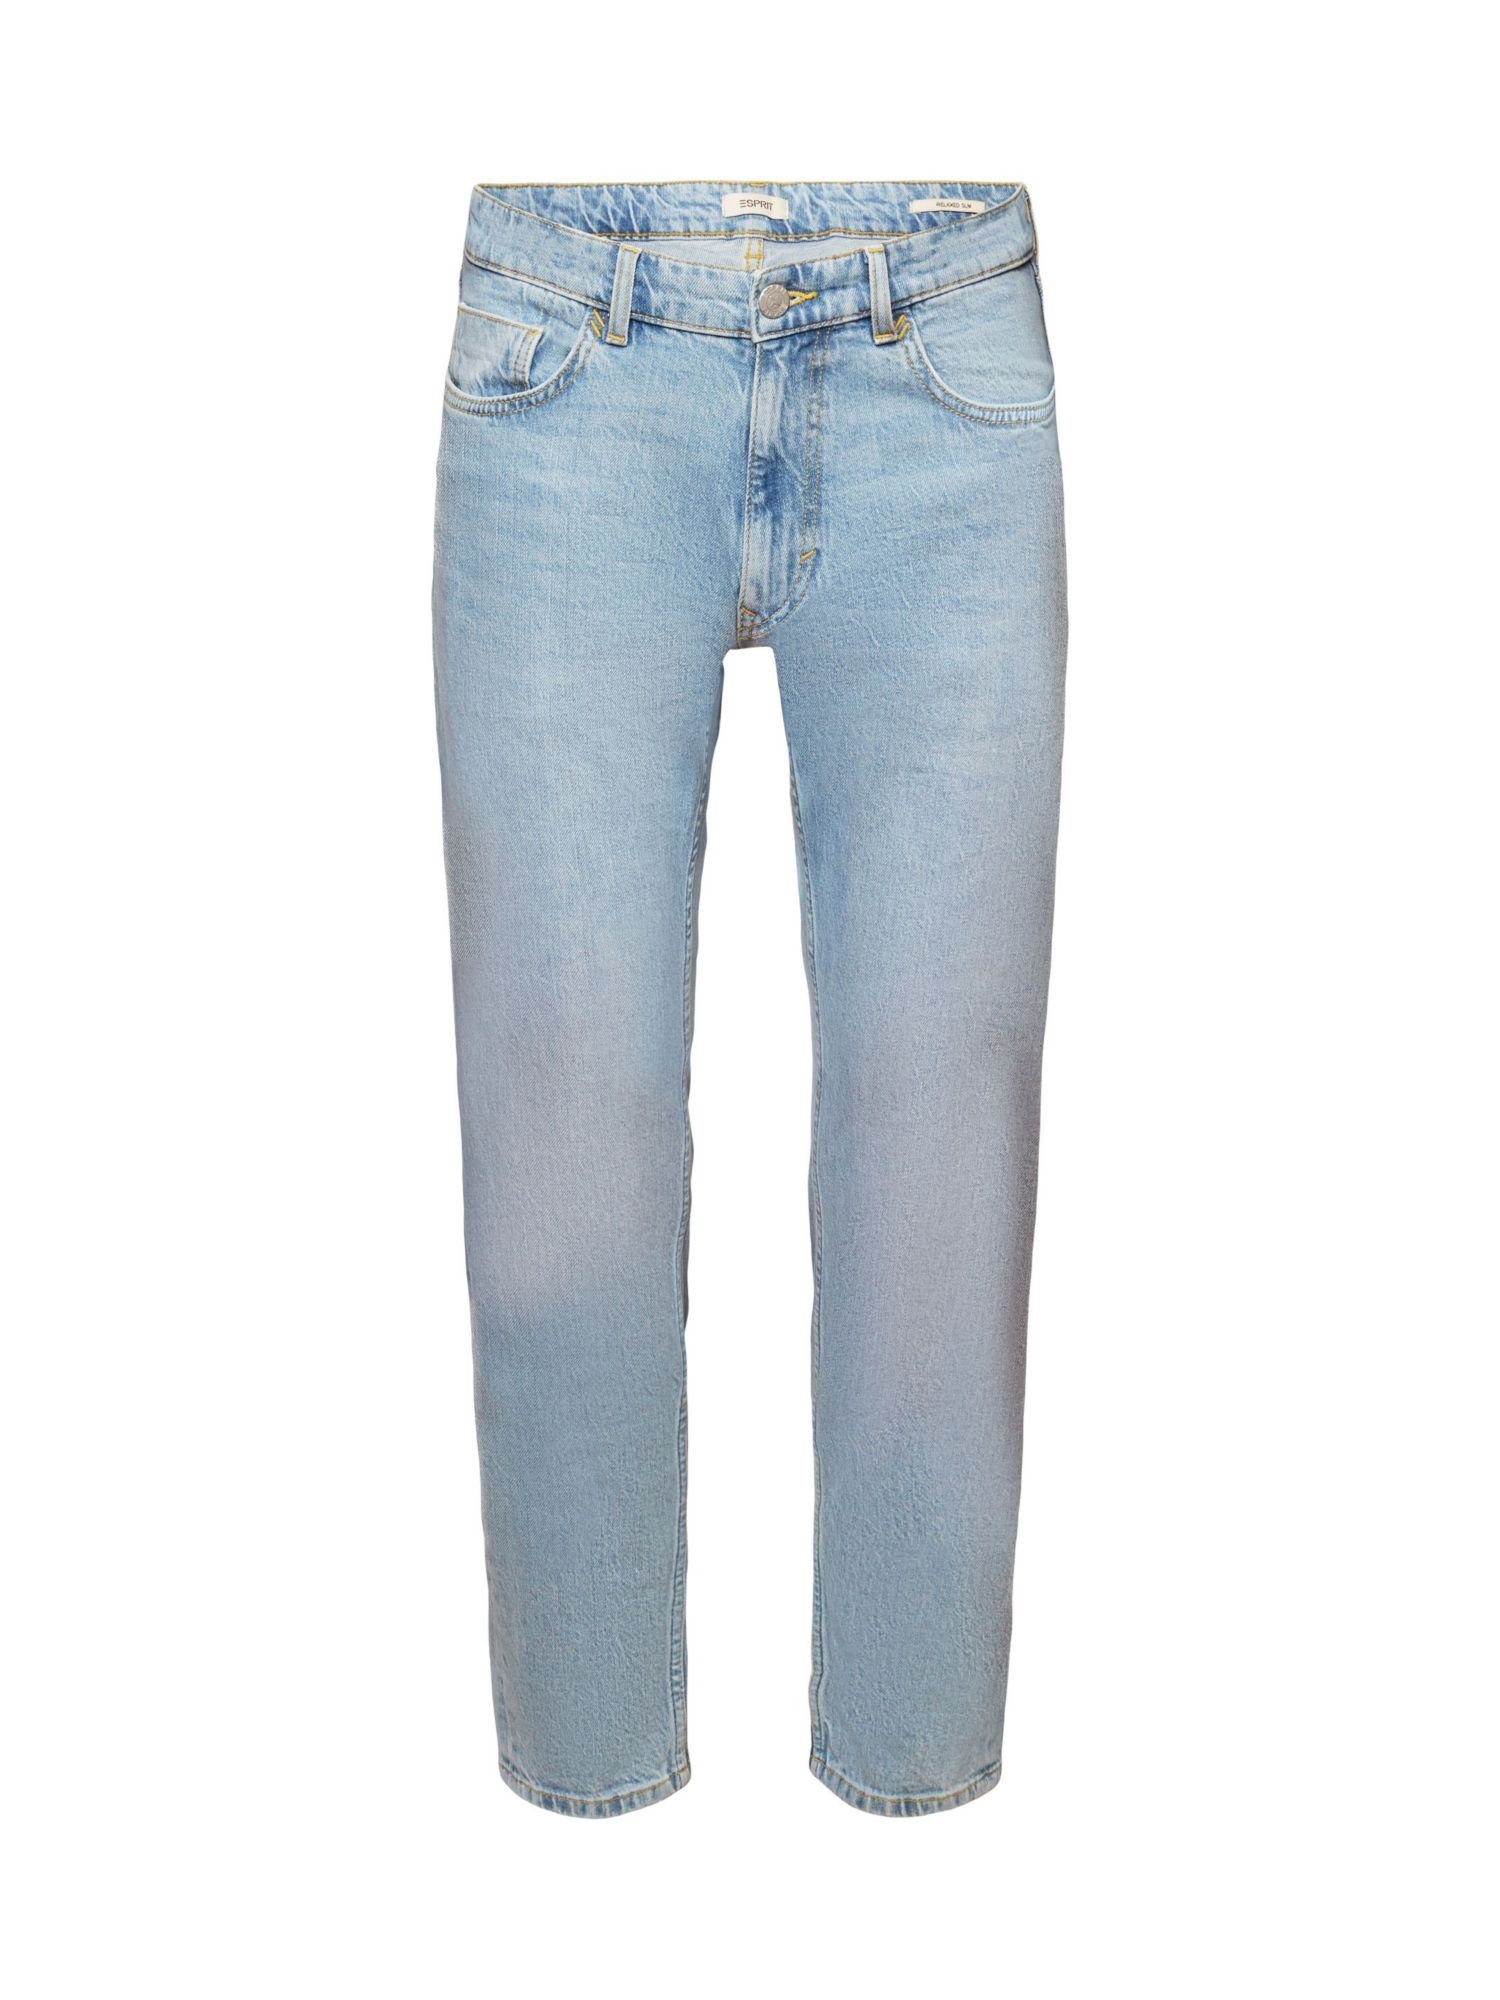 Esprit Slim-fit-Jeans Jeans in bequemer, schmaler Passform